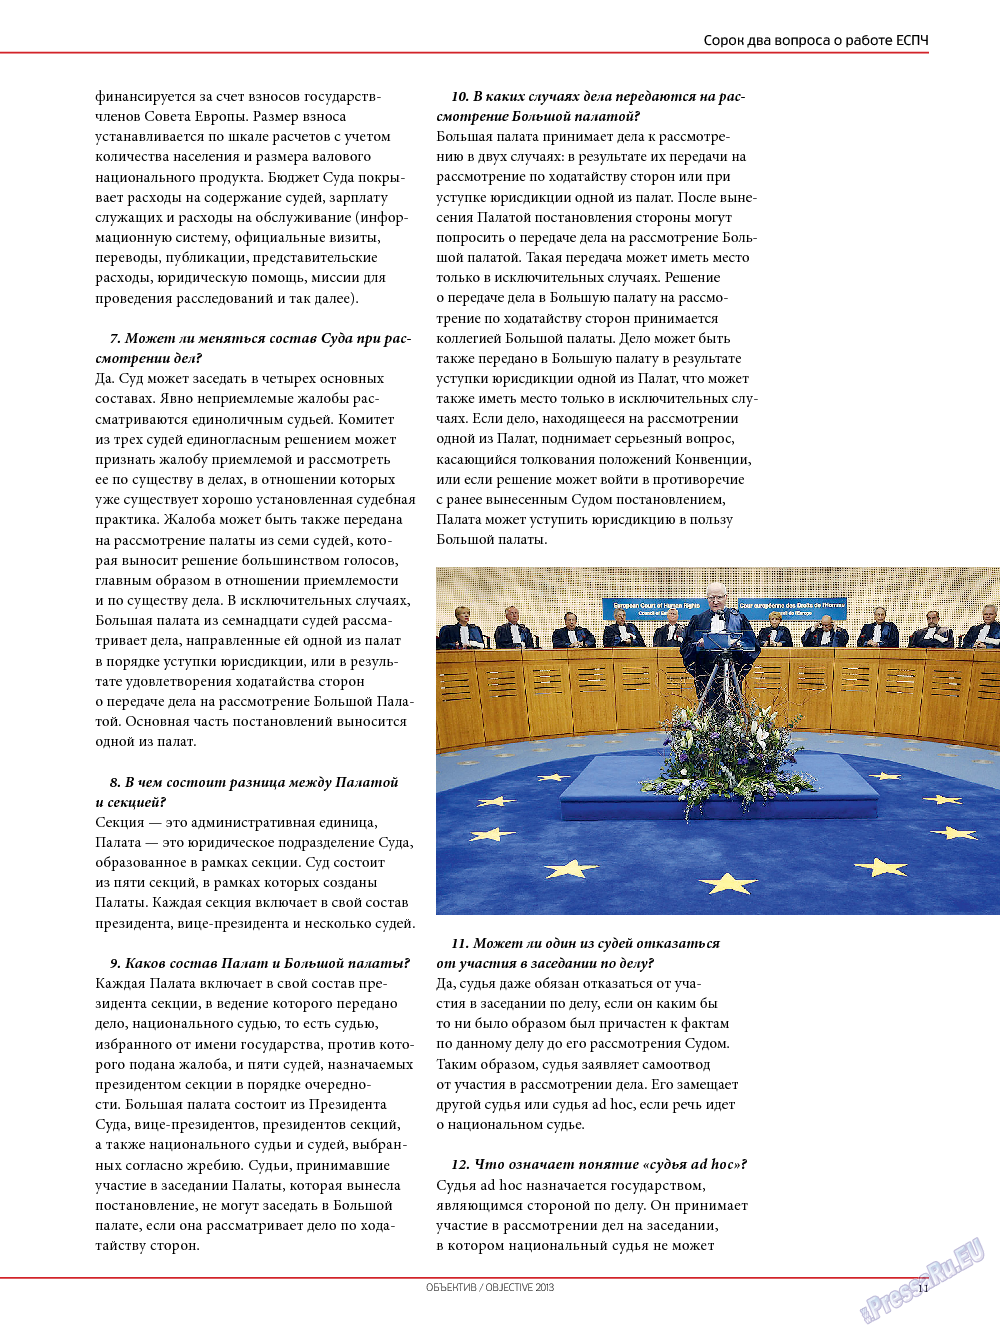 Объектив EU (журнал). 2013 год, номер 3, стр. 13